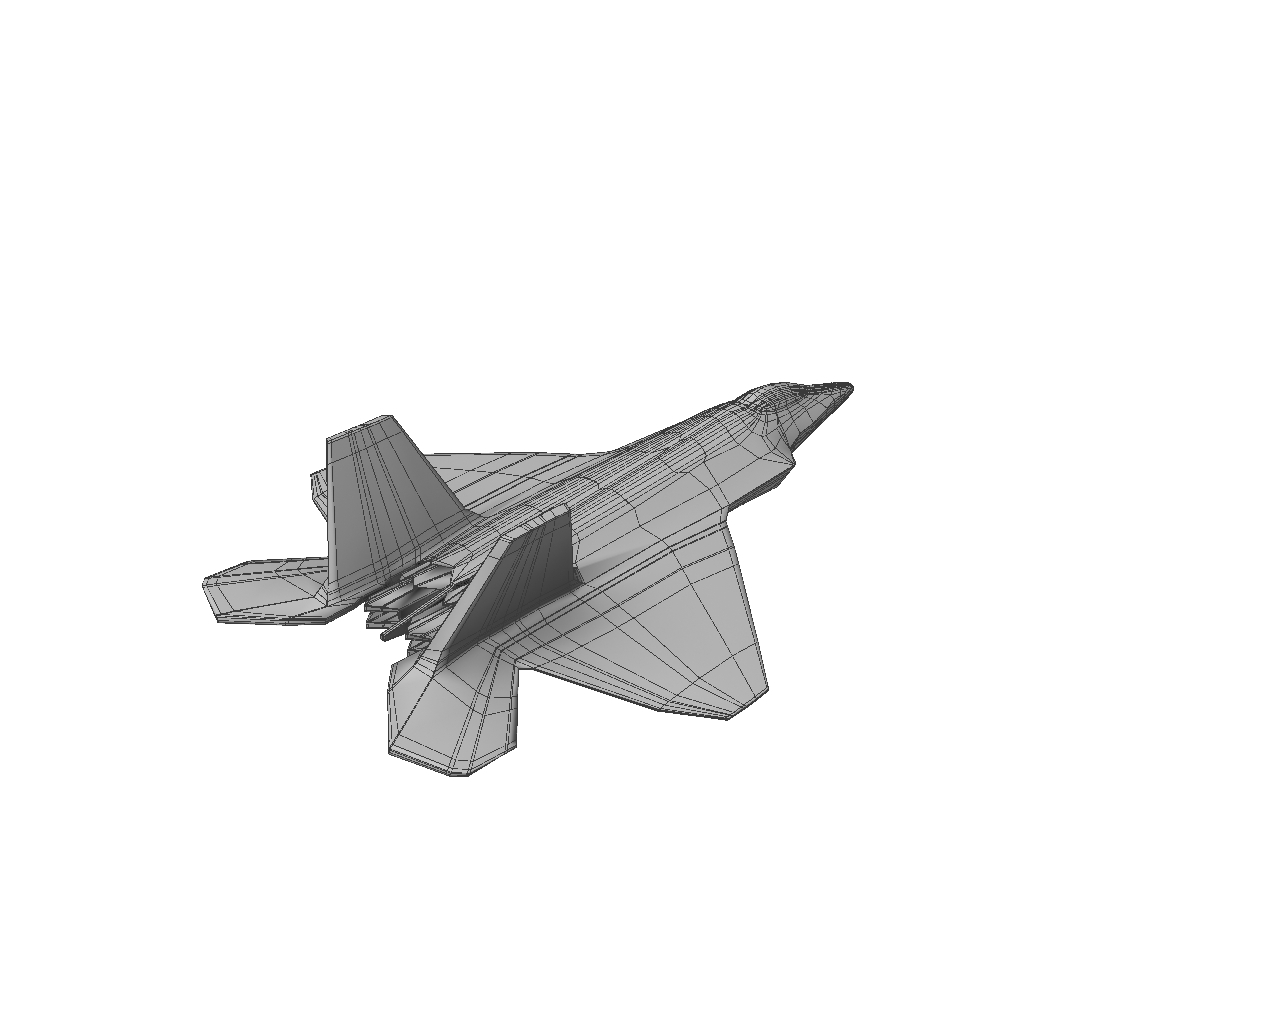 f22猛禽喷气式战斗机(低聚)3d模型